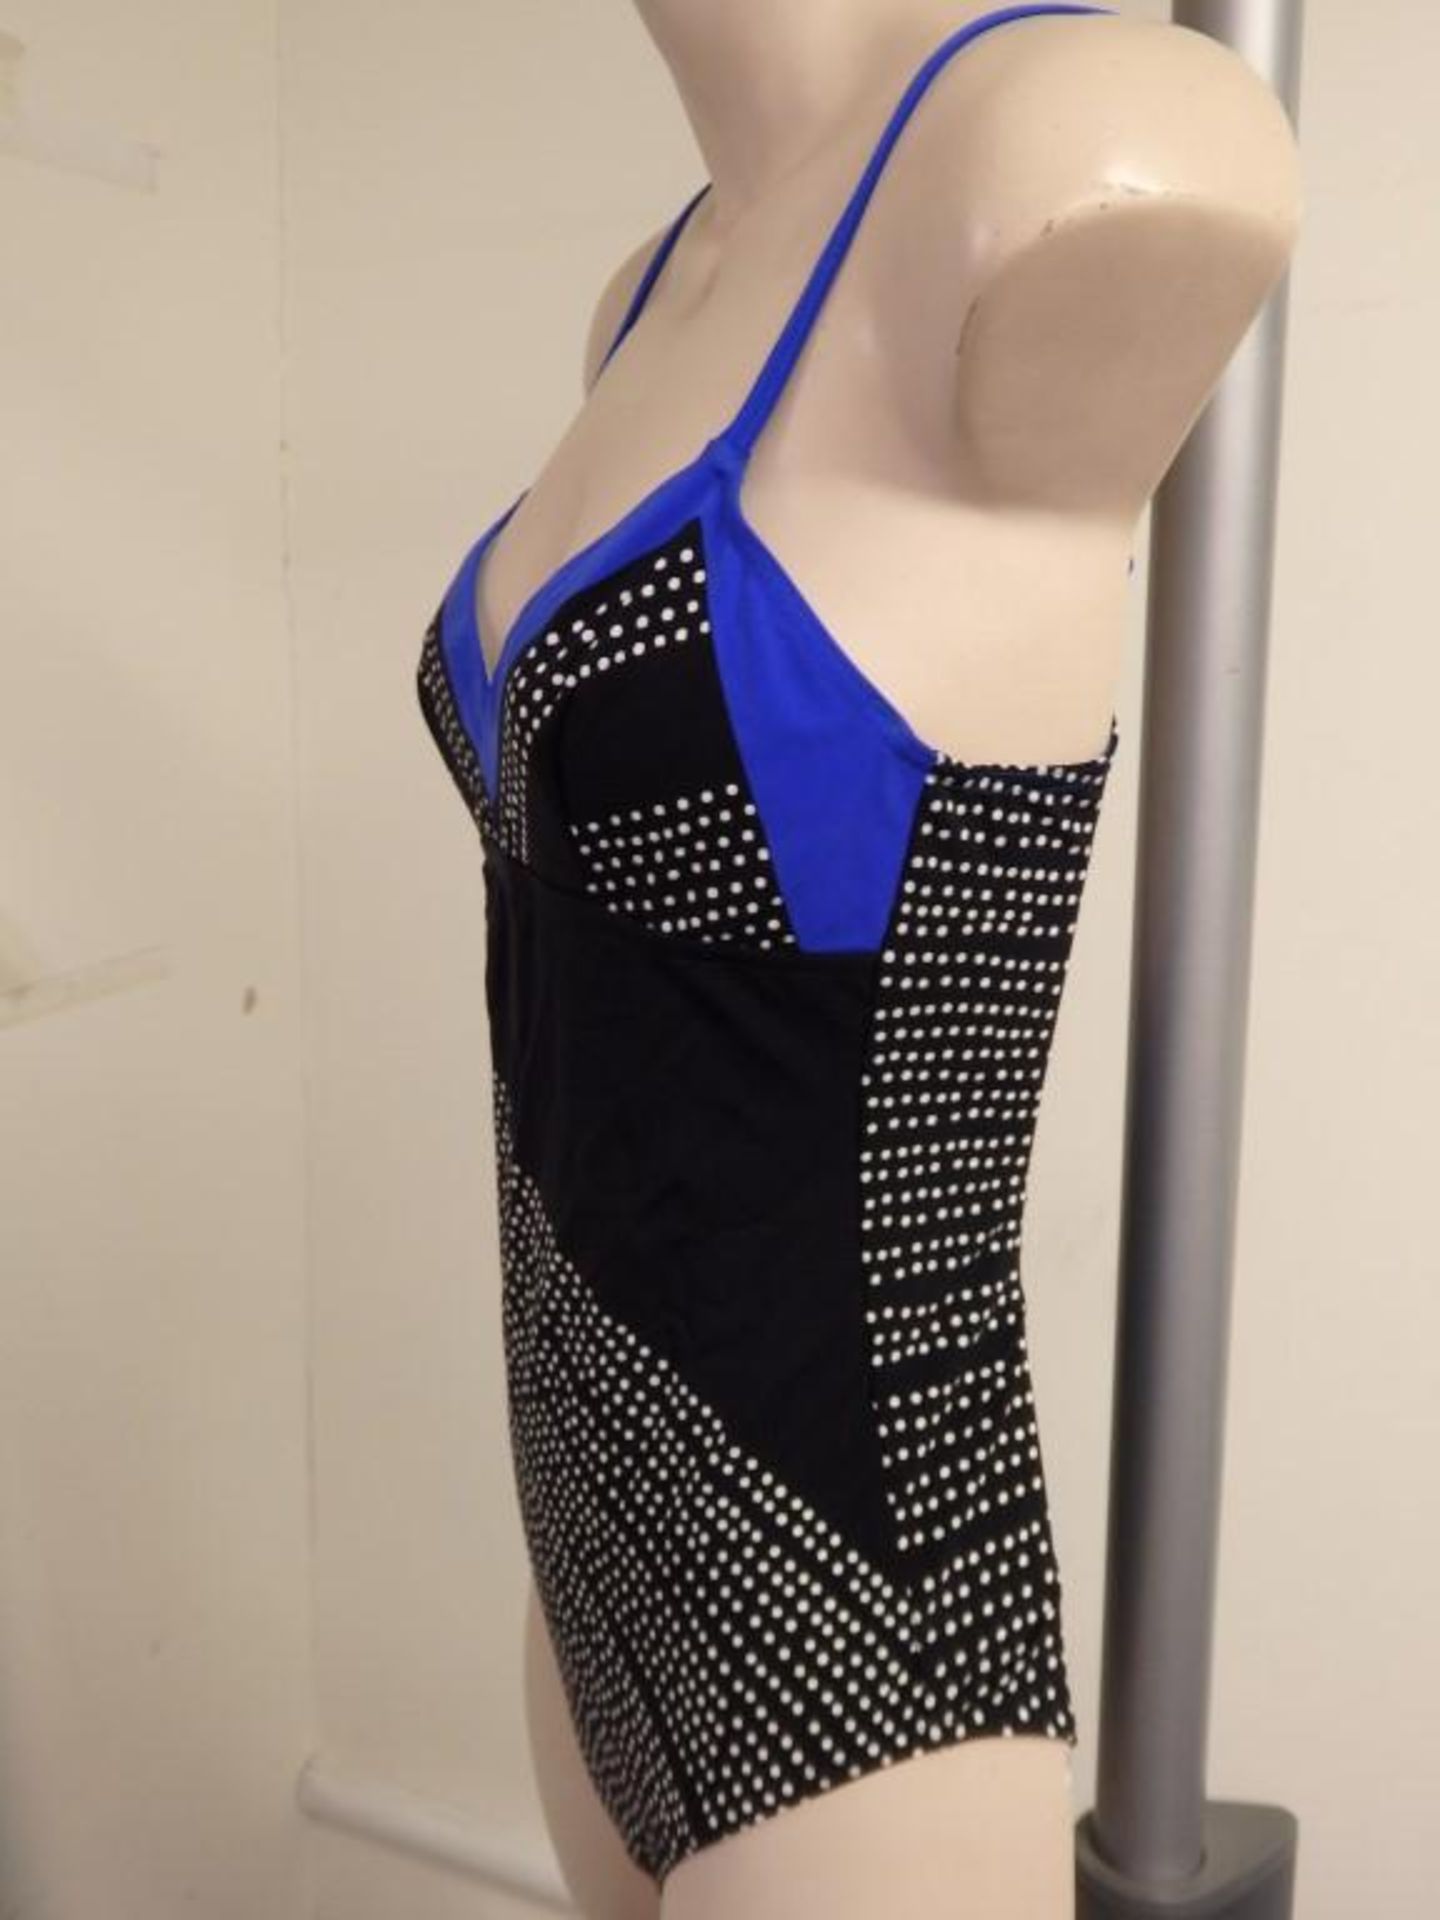 1 x Rasurel - Black Polka dot with royal blue trim &frill Tobago Swimsuit - B21039 - Size 2C - UK 32 - Image 5 of 8